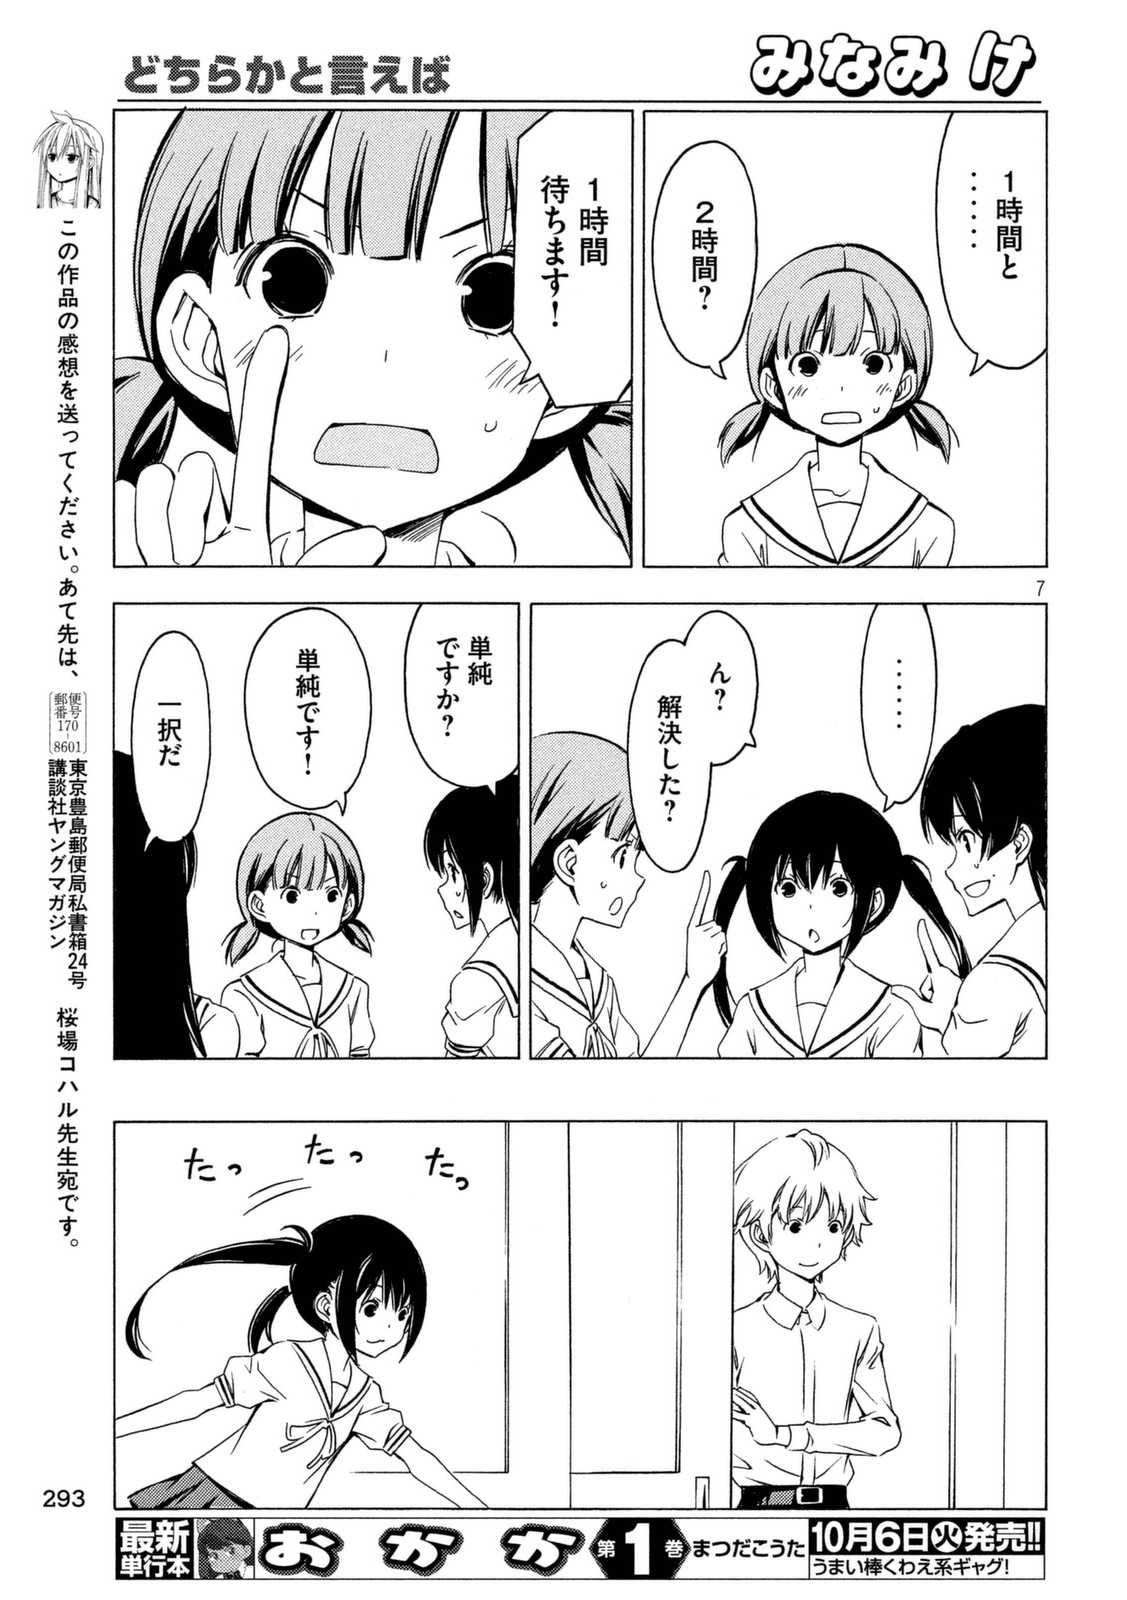 Minami-ke - Chapter 277 - Page 7